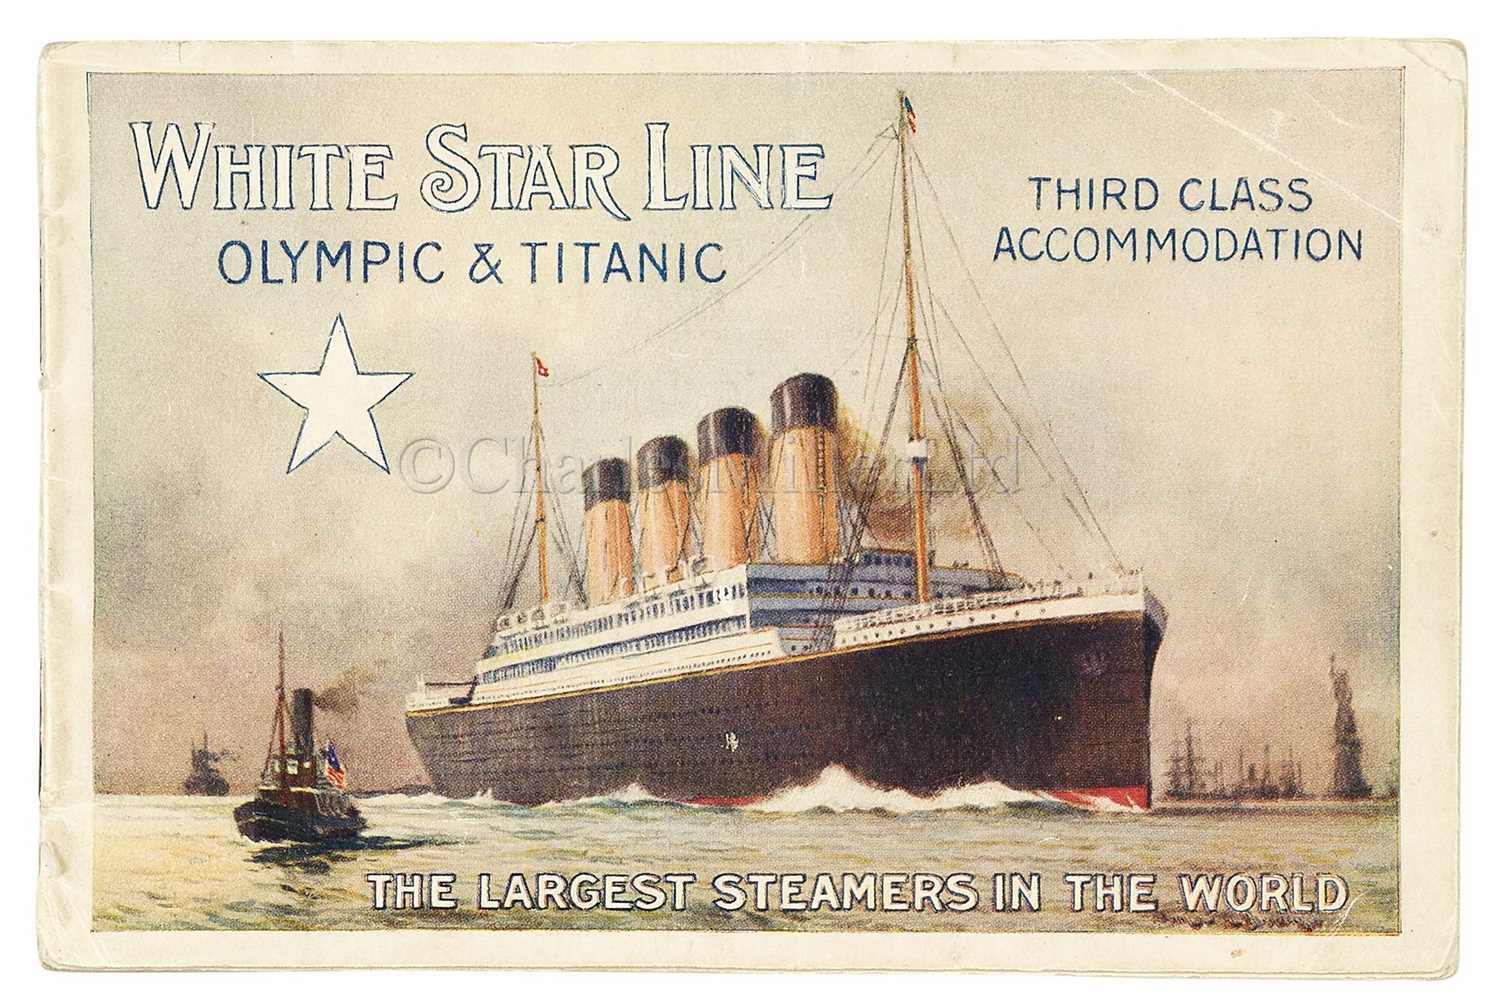 White Star Line RMS Titanic Third Class Baggage Sticker 1912 